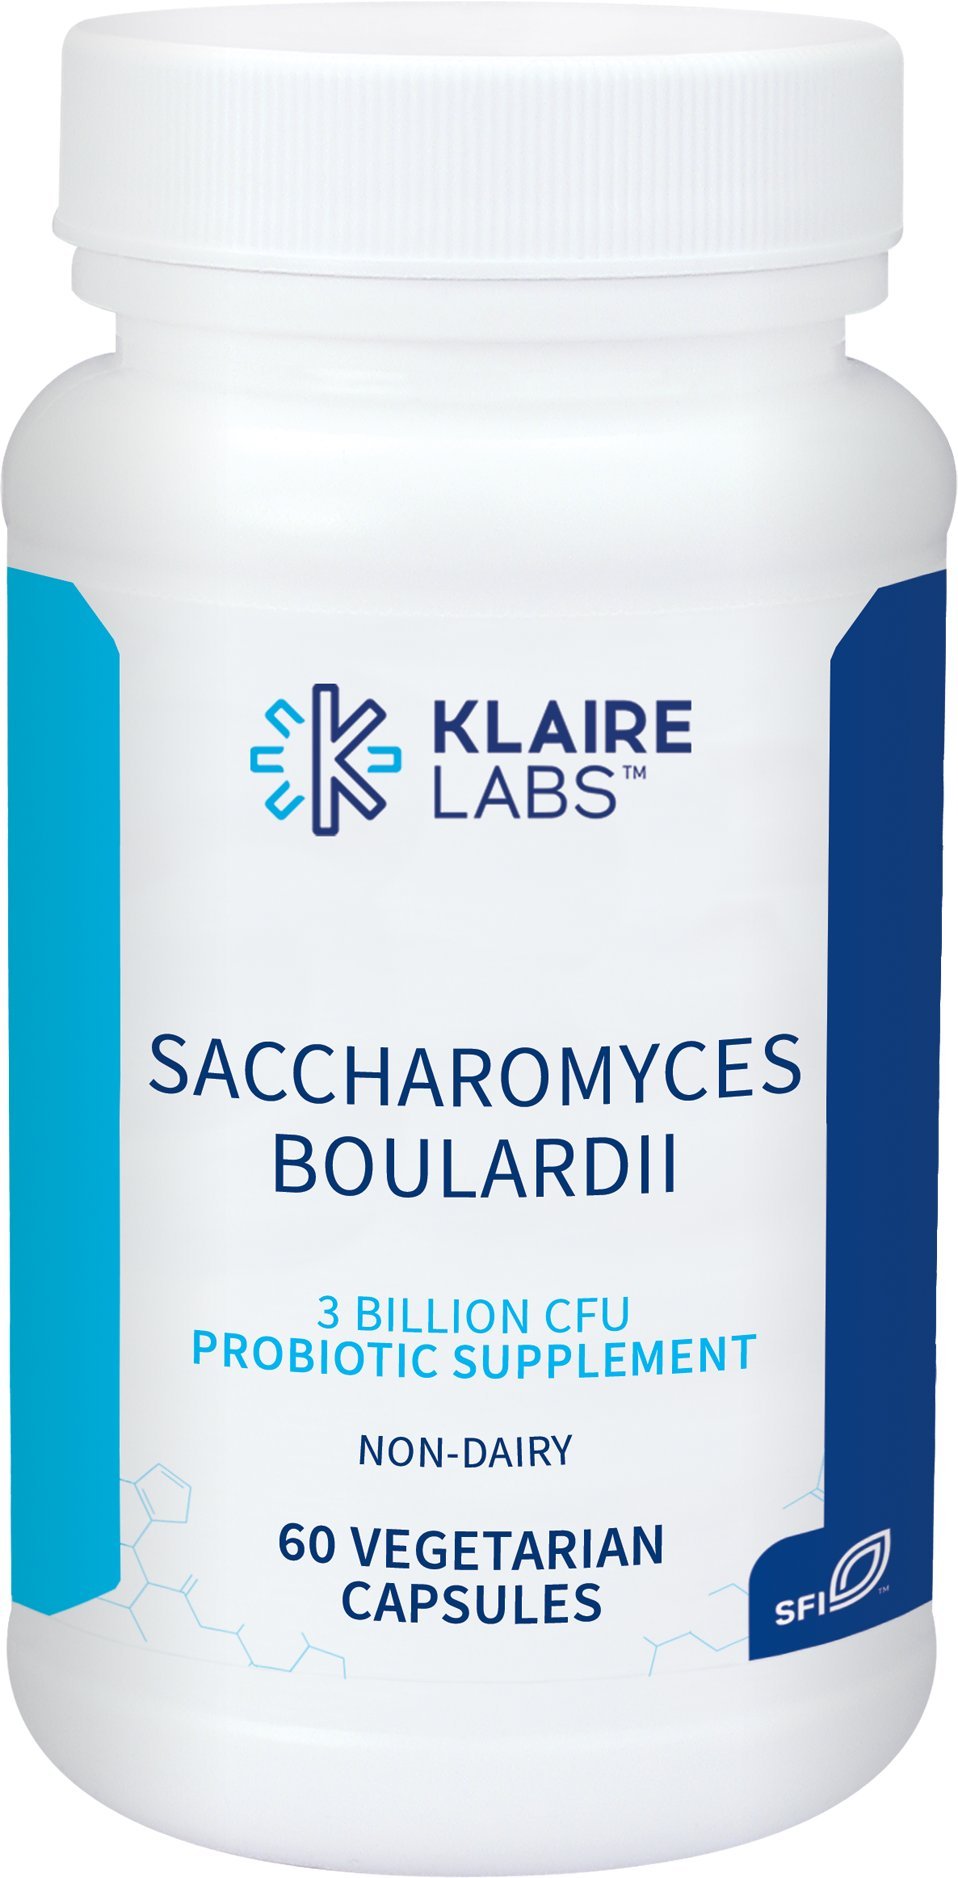 Saccharomyces boulardii capsule 60 count